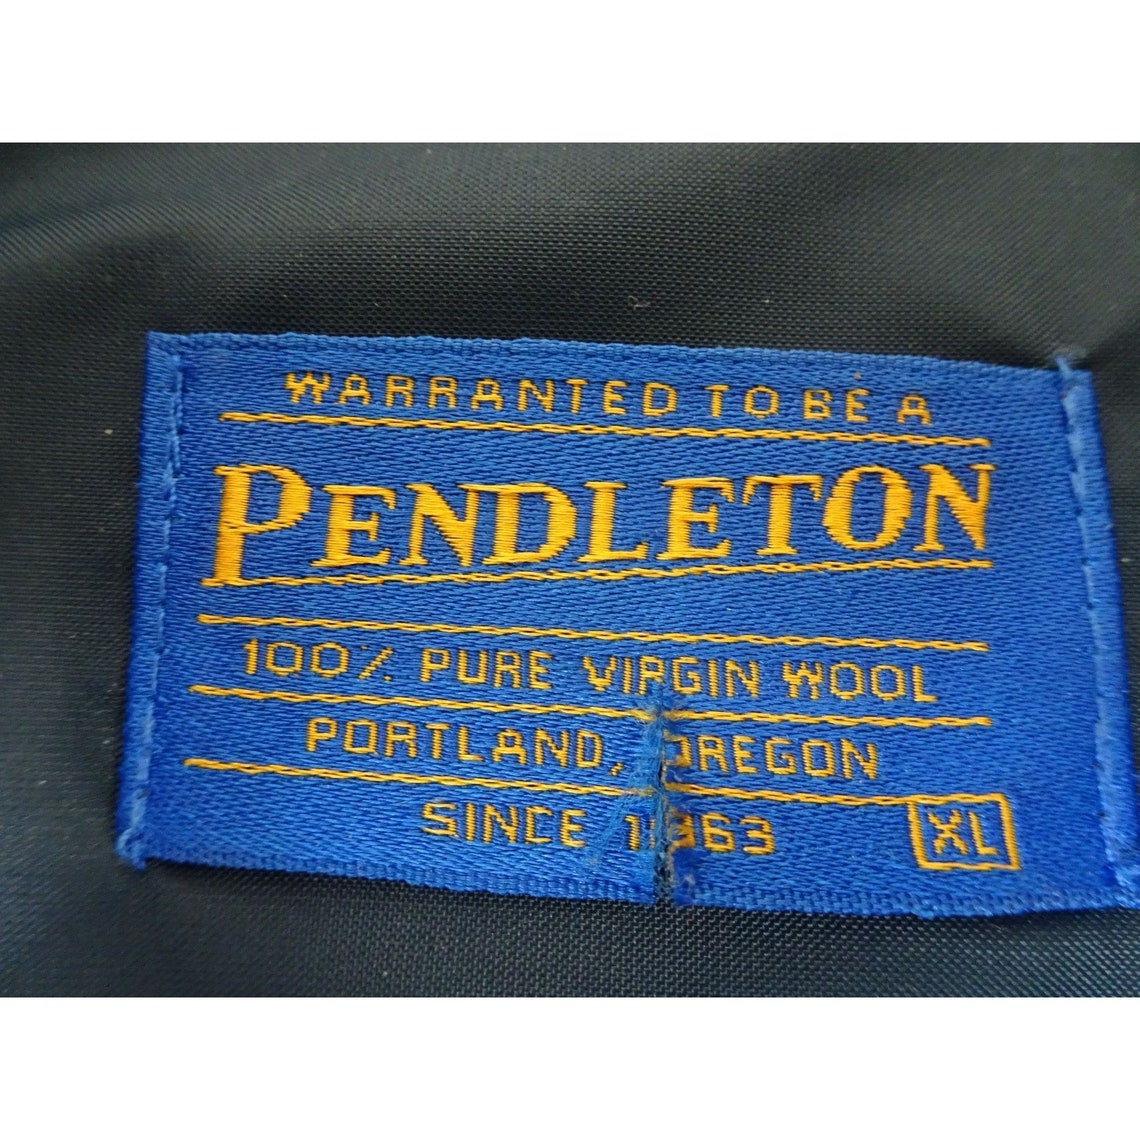 Pendleton Jacket XL Camp RN 29685 Red White Blue - Etsy